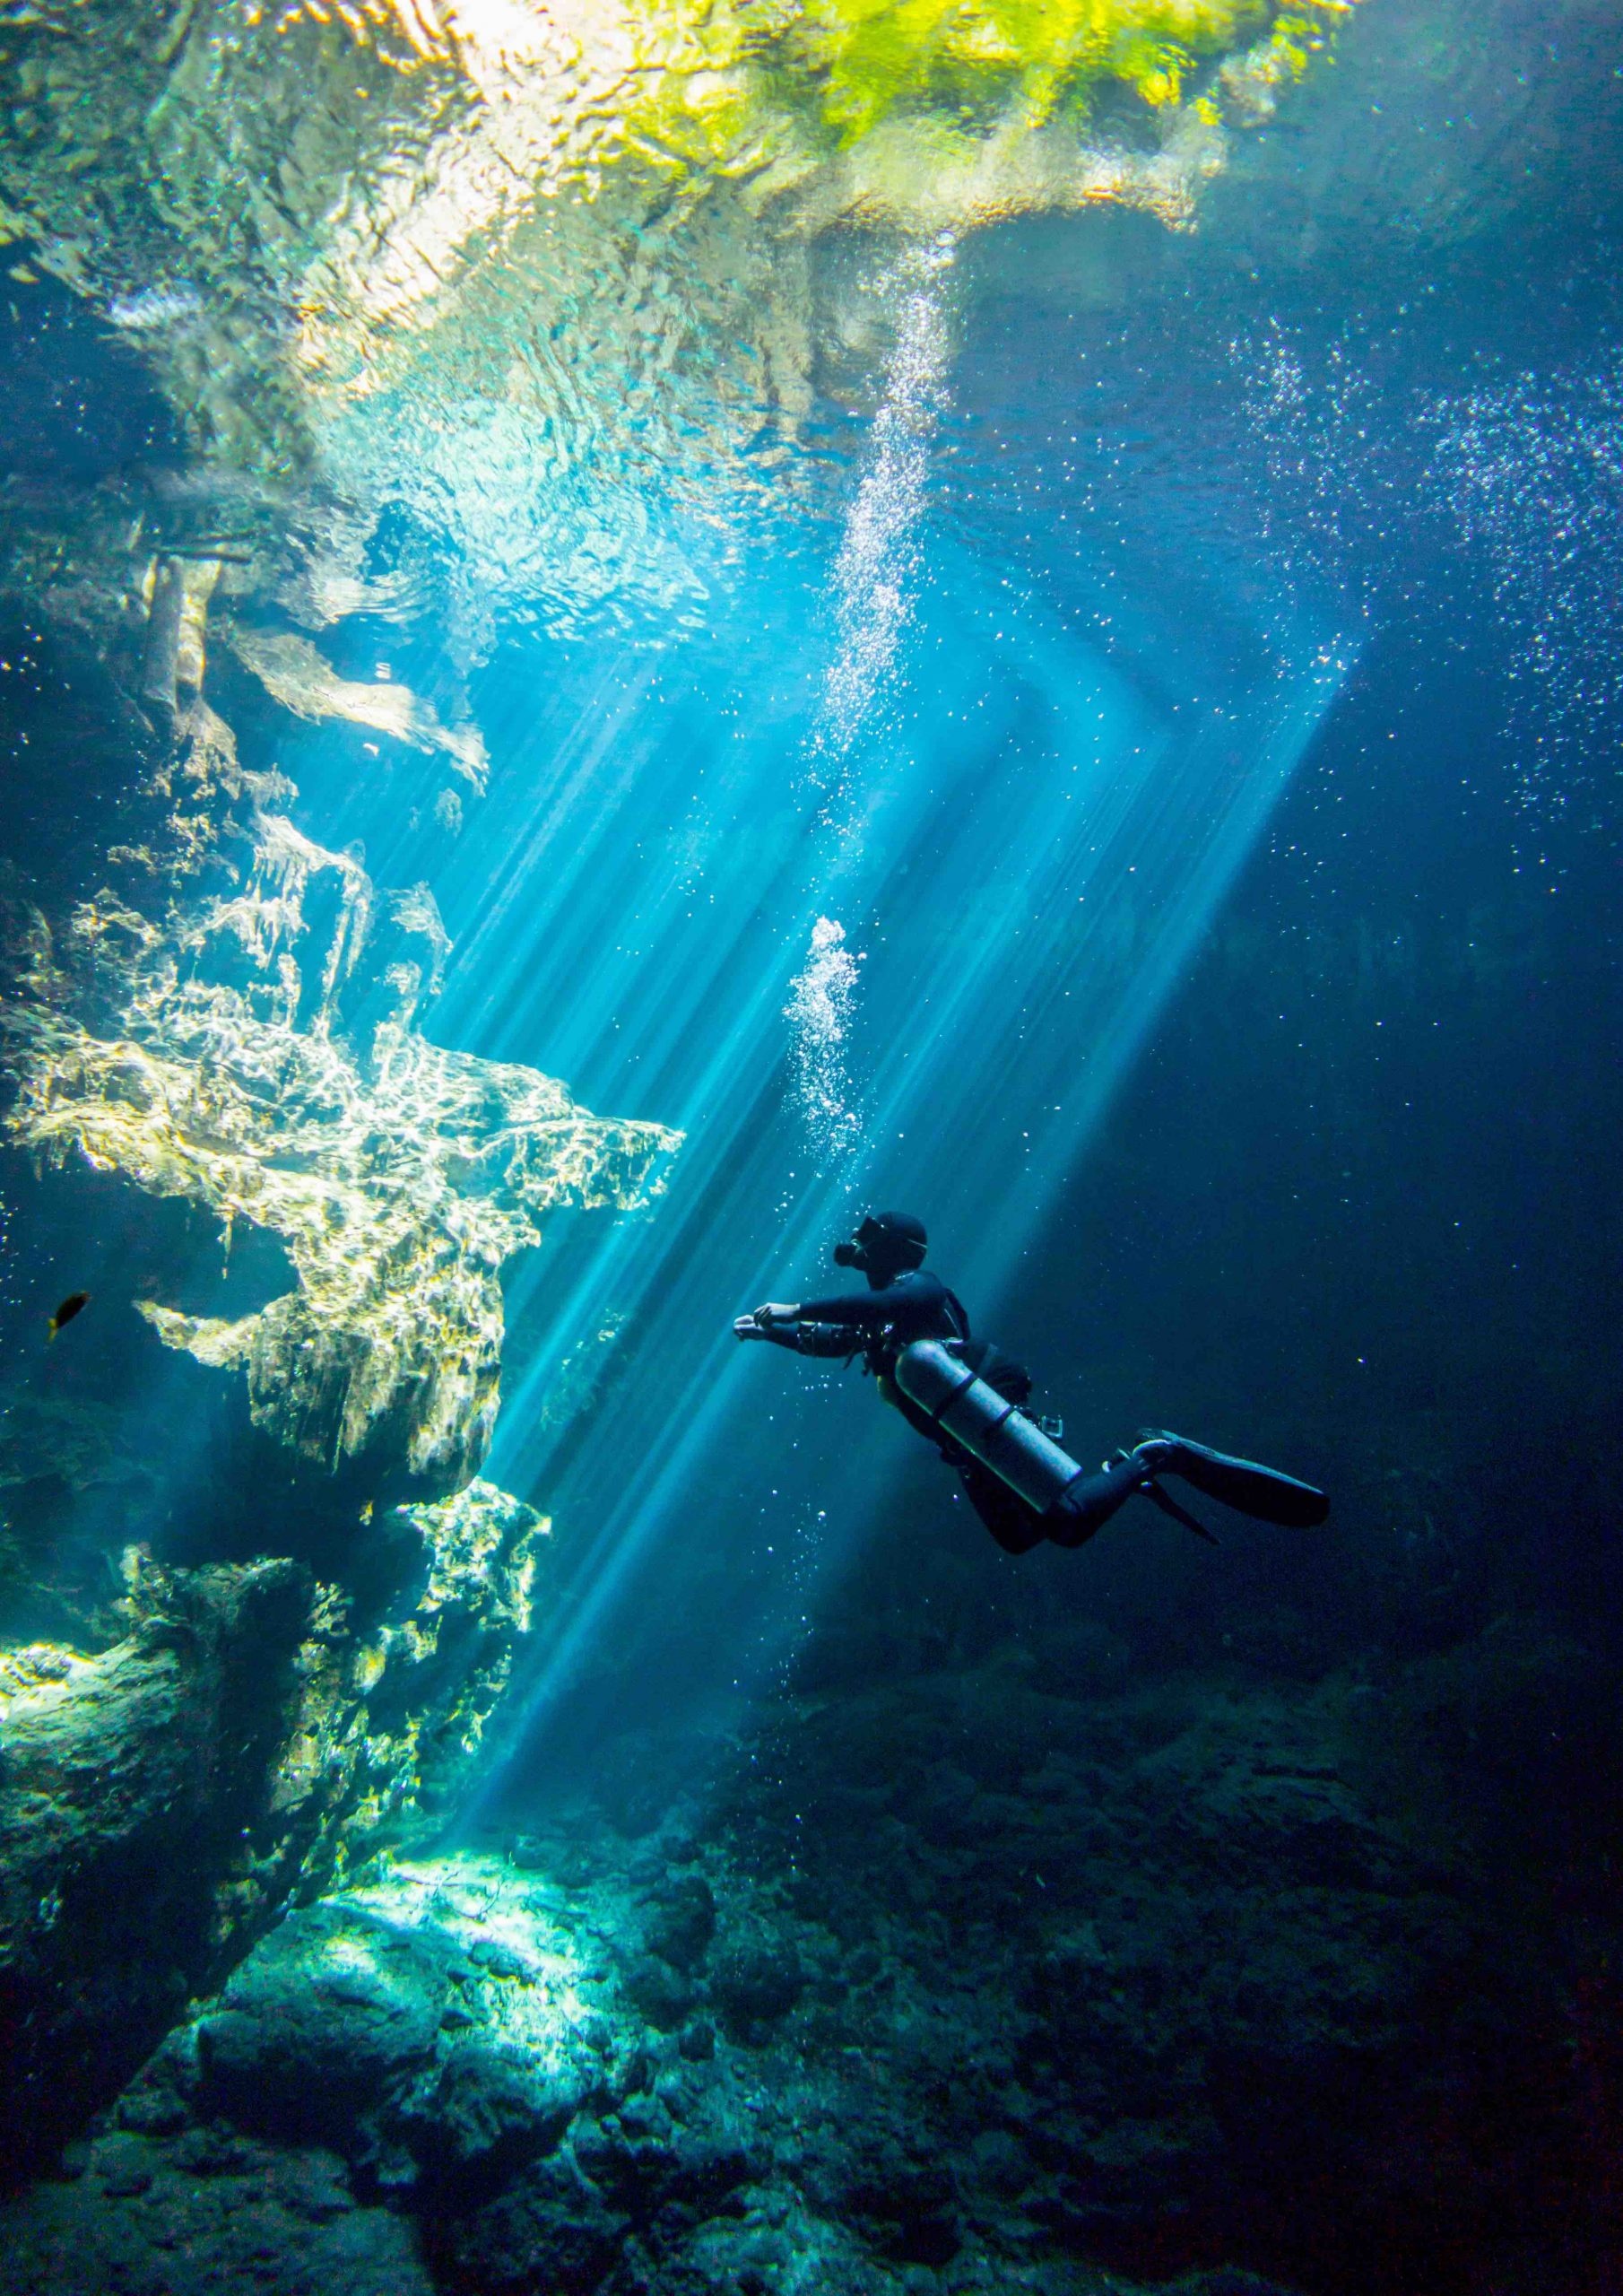 HD wallpaper, Dos Ojos Tulum, Diving Cenotes The Pit, Phone Hd Diving Wallpaper Image, 1810X2560 Hd Phone, Mysterious Underwater Caves, Playa Del Carmen Mexico